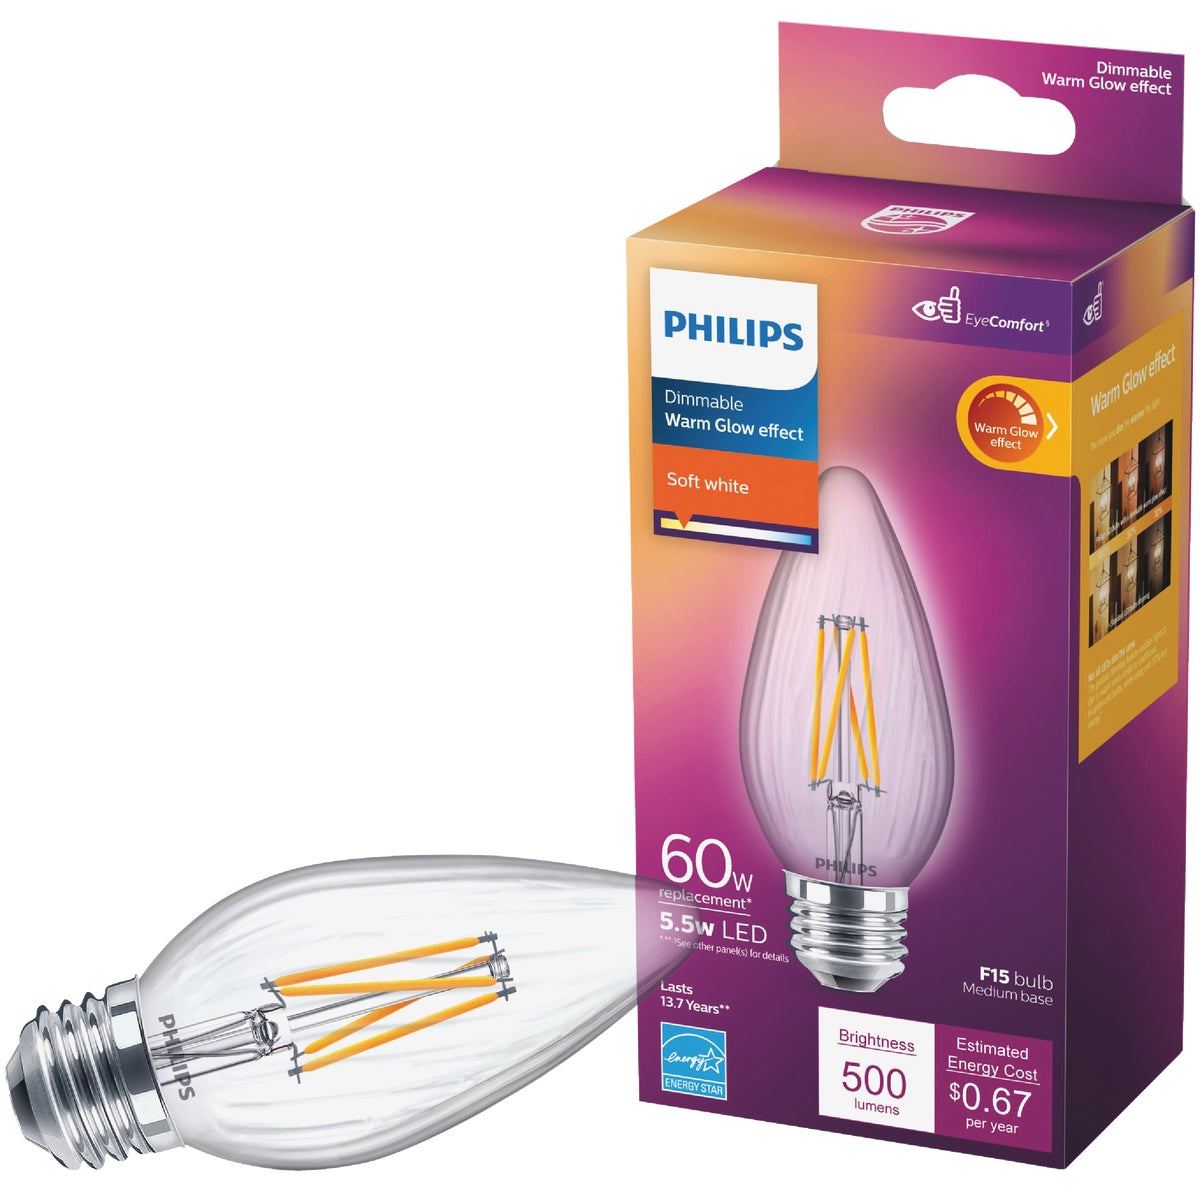 Item 540167, F15 post light LED (light emitting diode) light bulb with medium base.